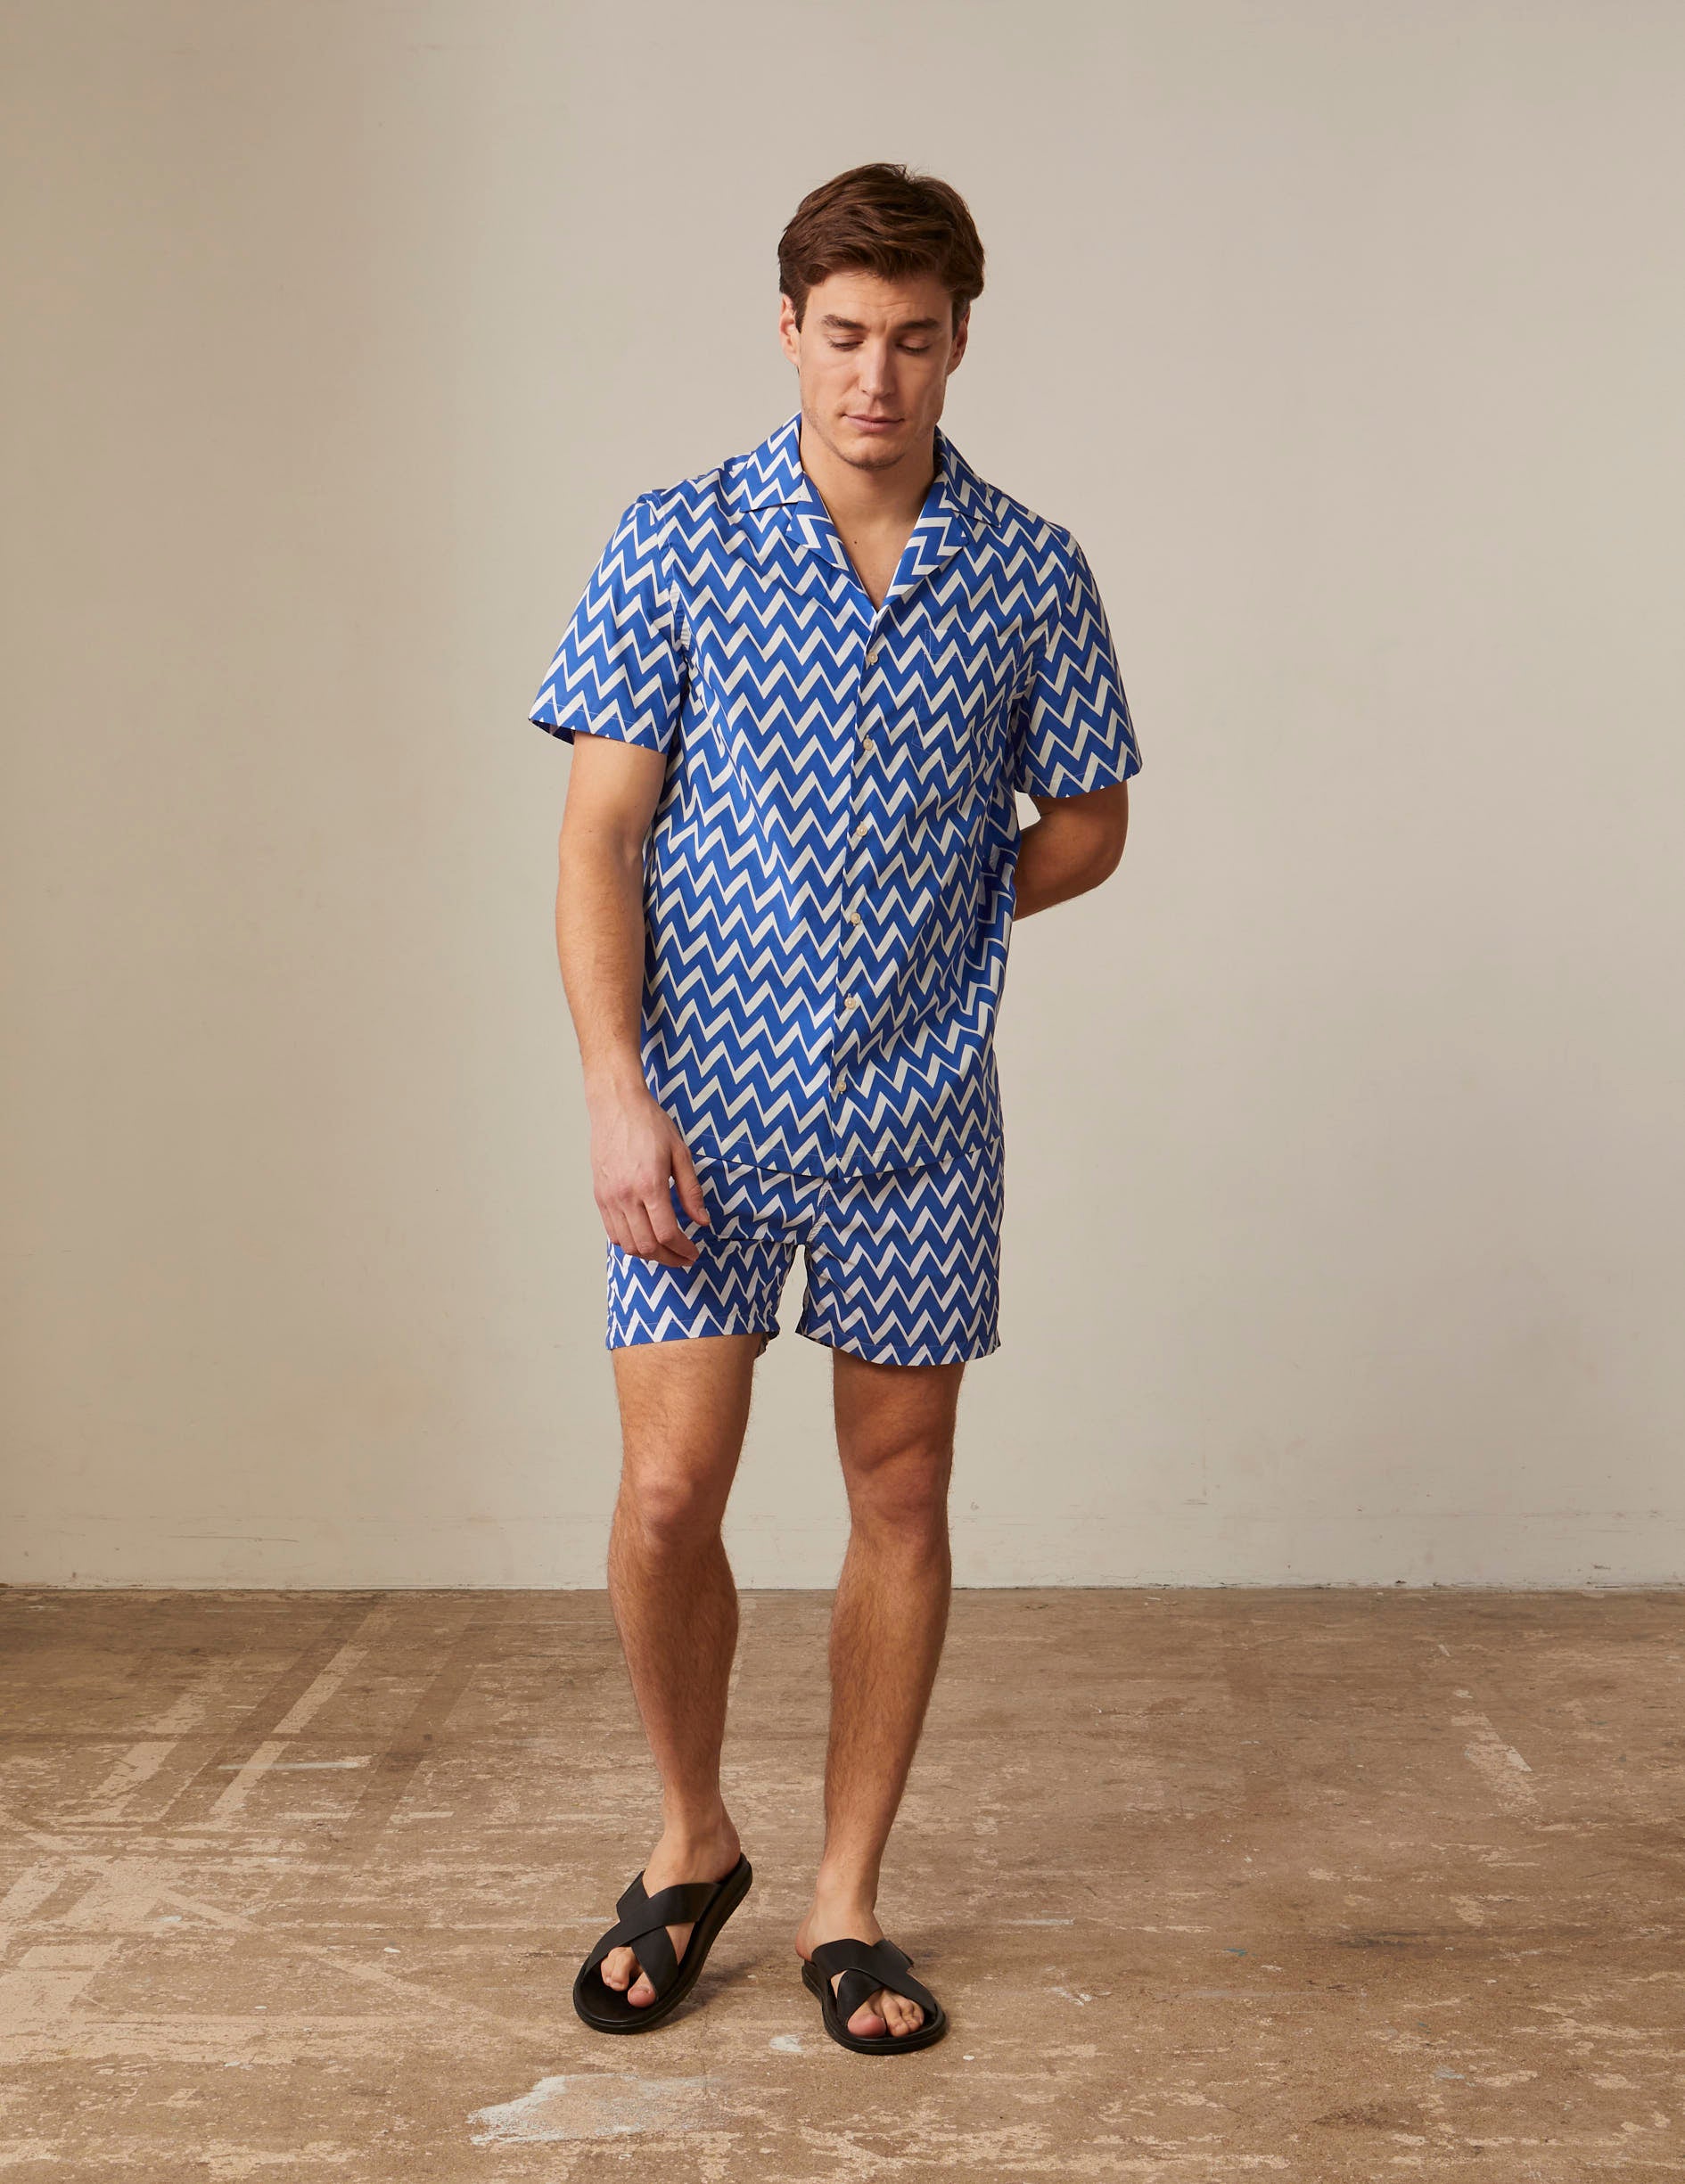 Short sleeve printed blue Hilann shirt - Poplin - Pyjamas Collar